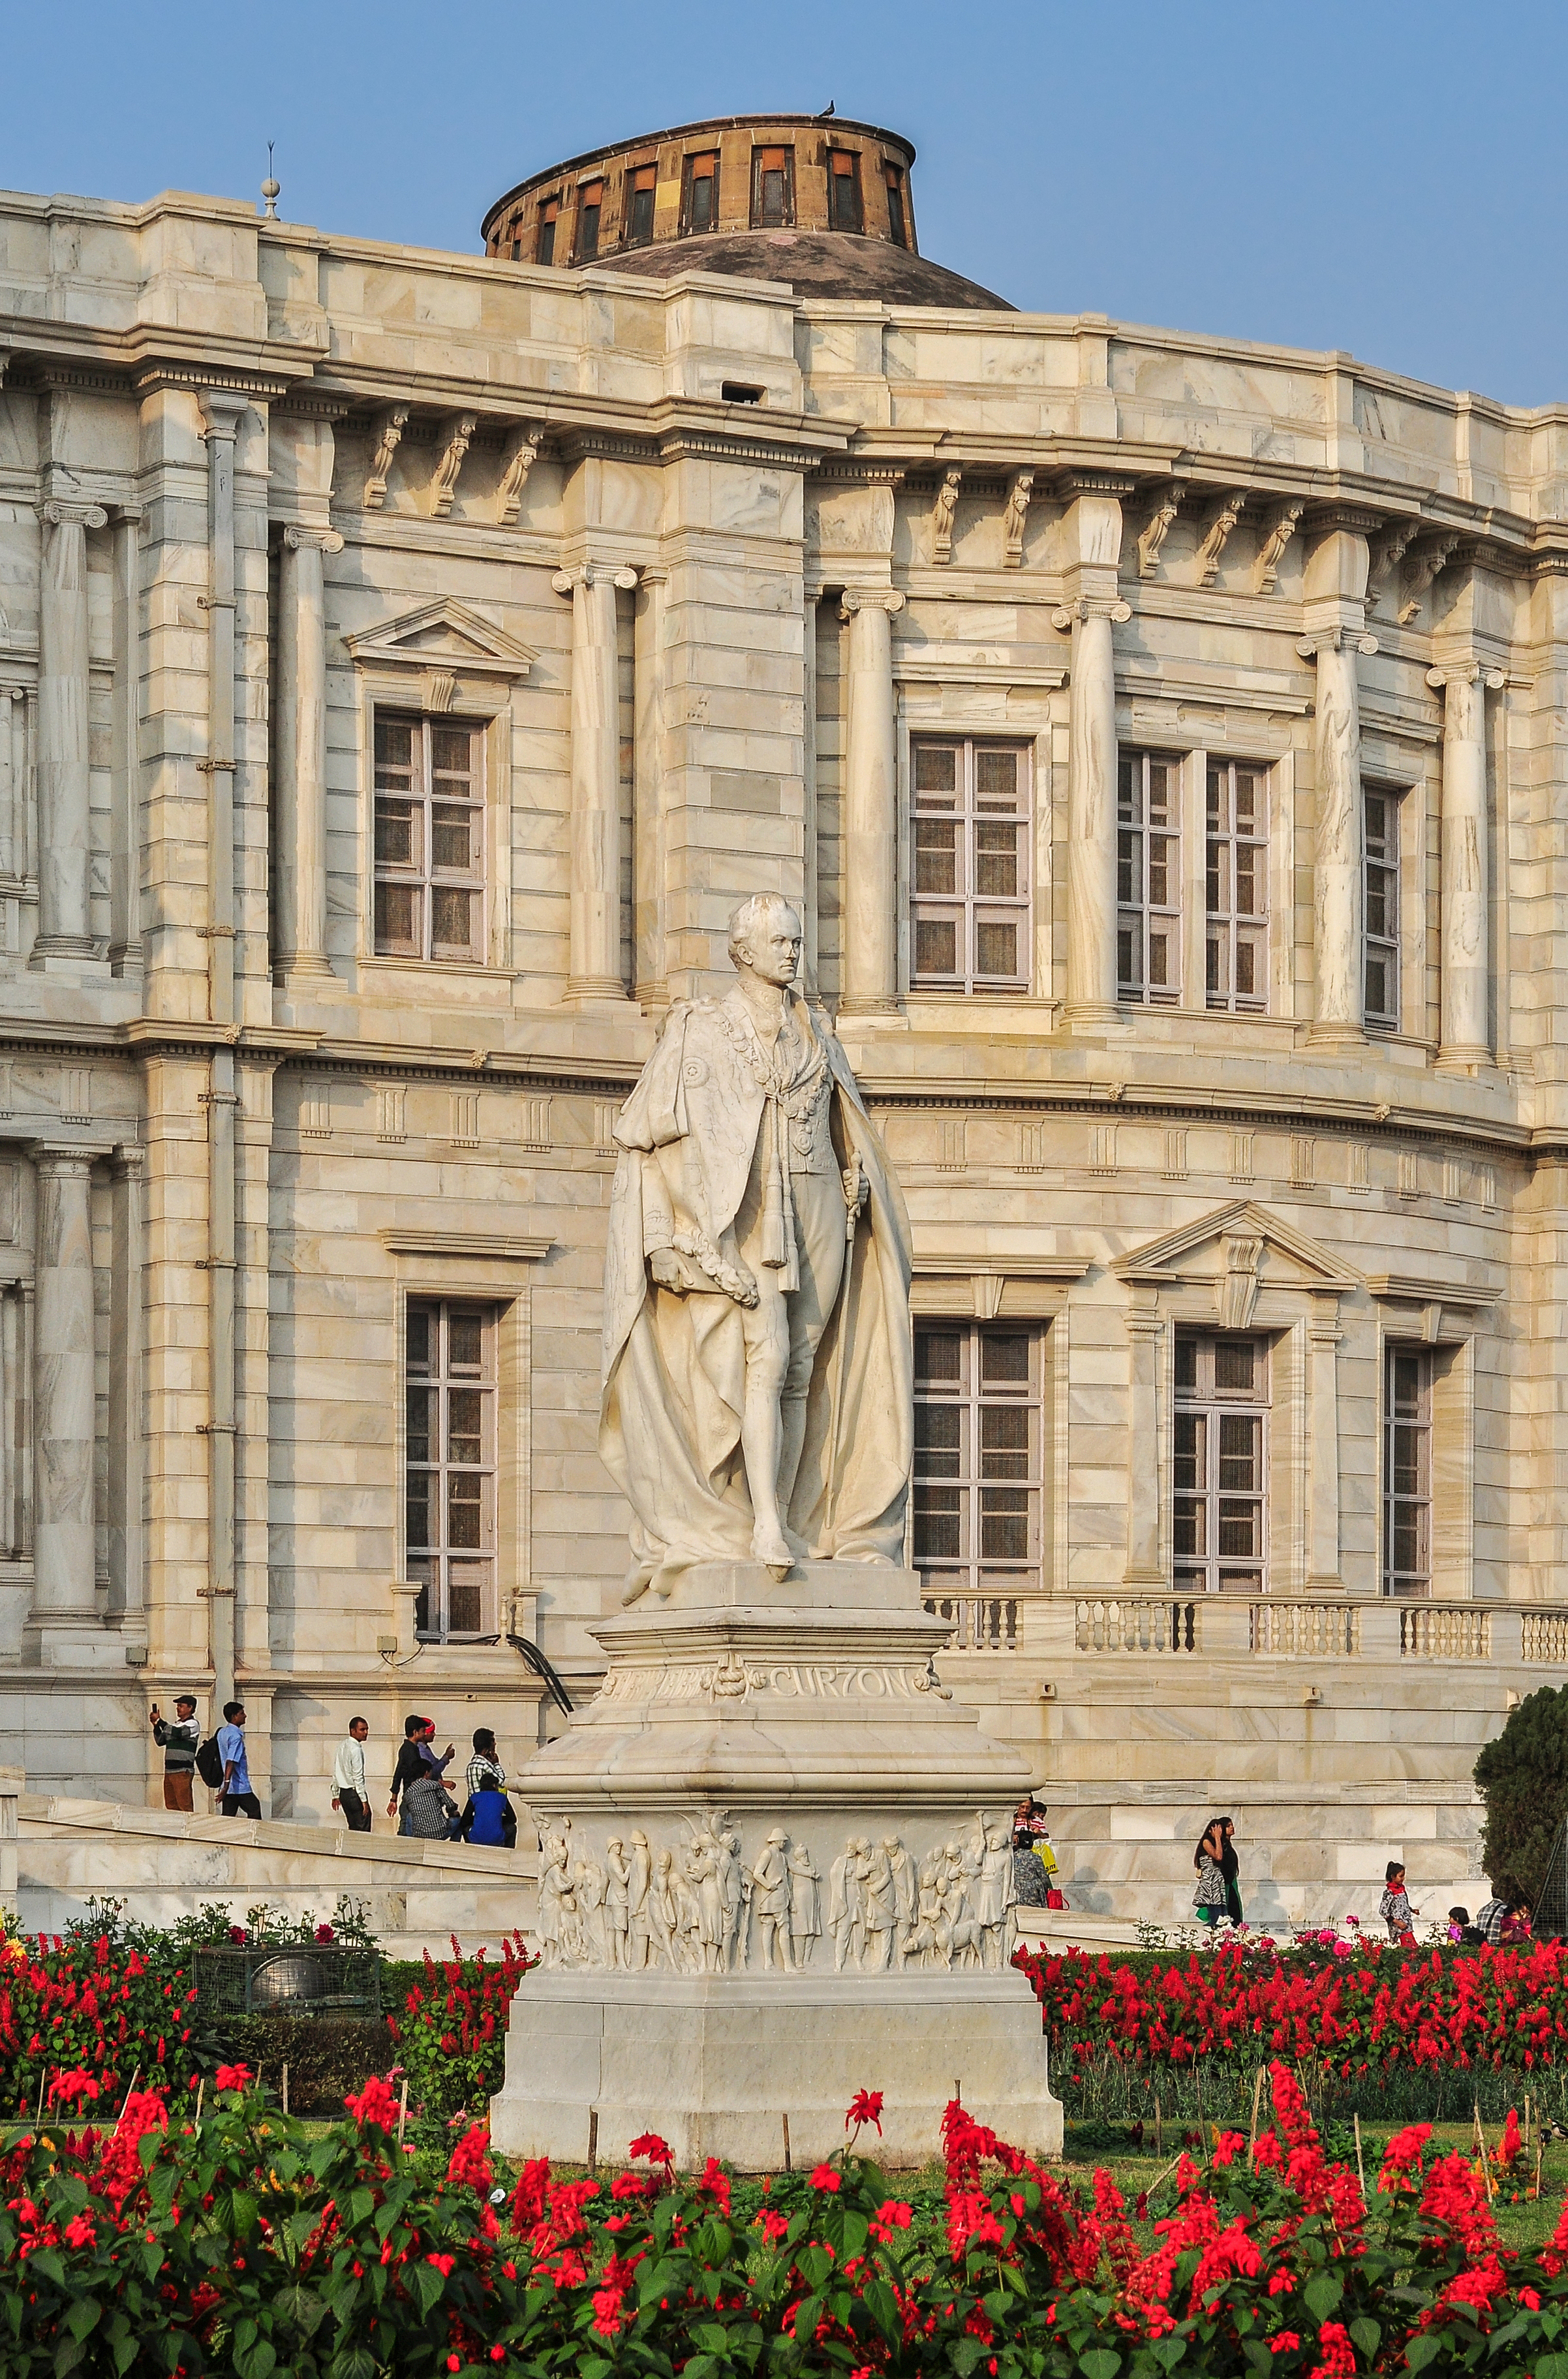 Statue of Lord Curzon at Victoria Memorial, Kolkata